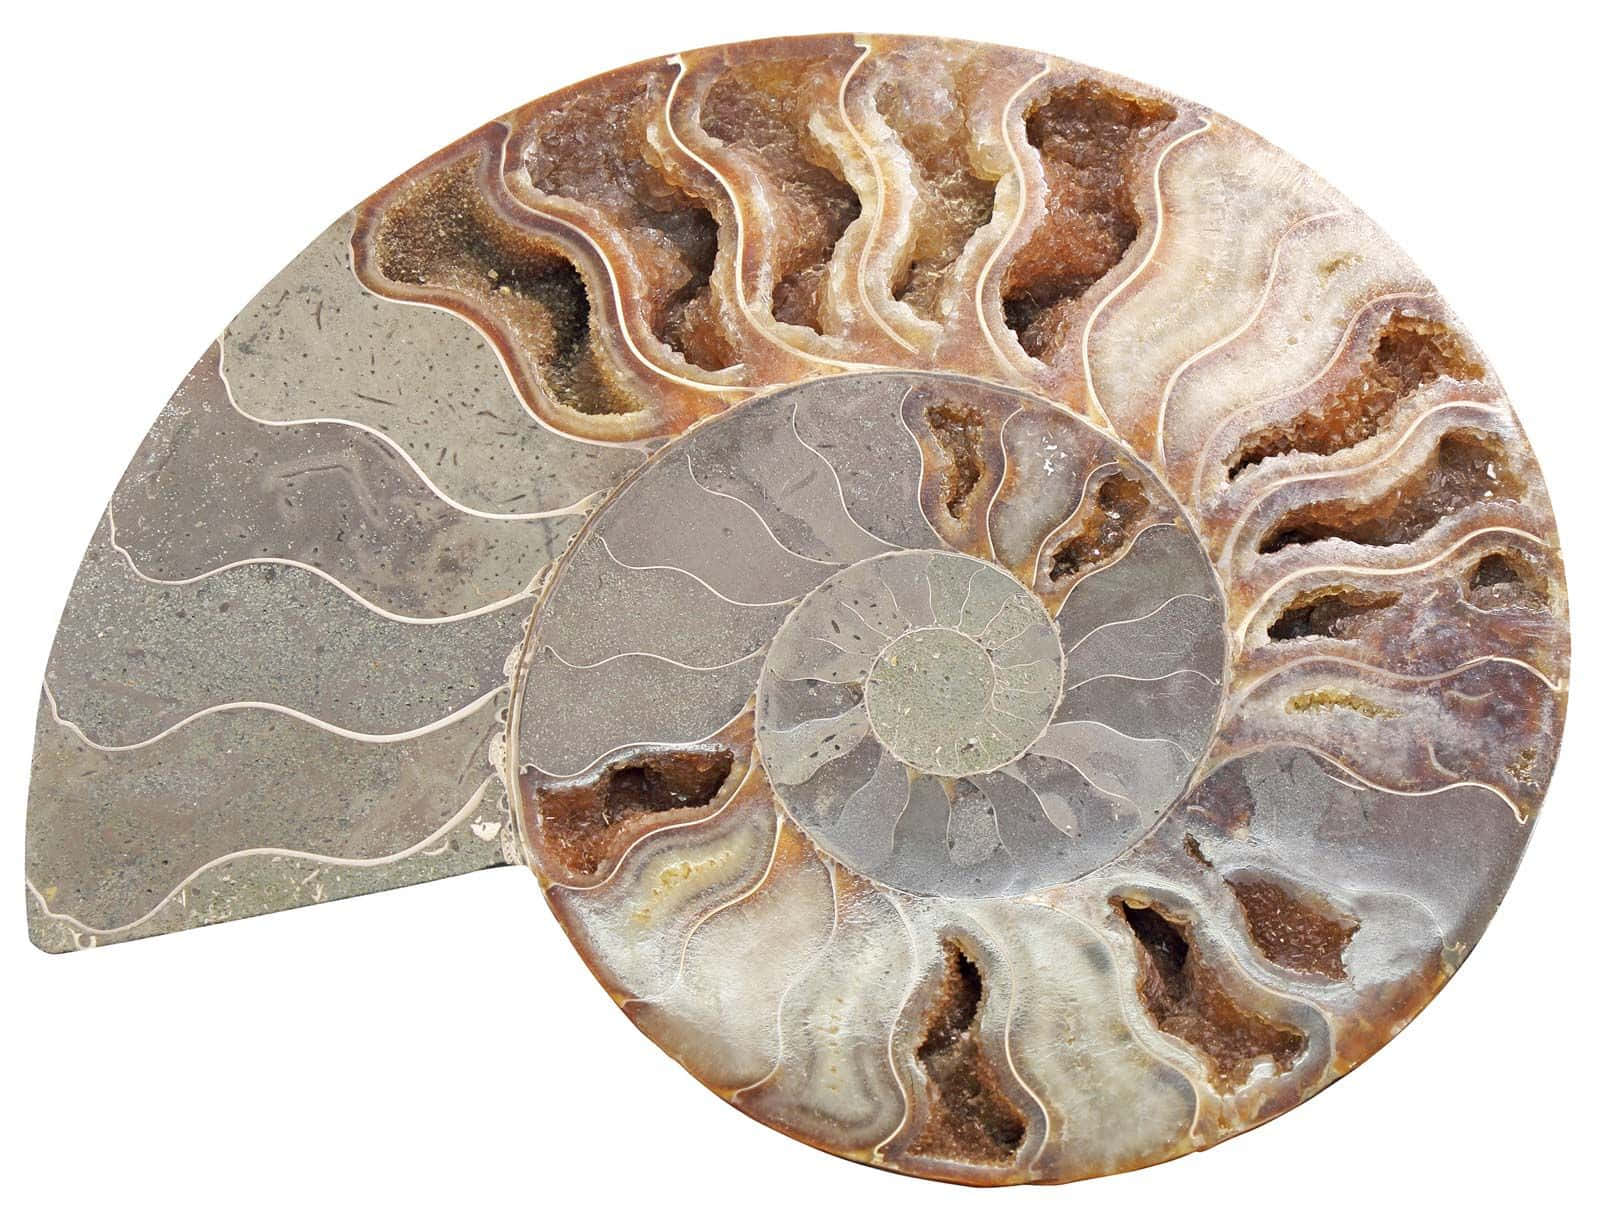 Ammonite Fossil Cross Section Wallpaper